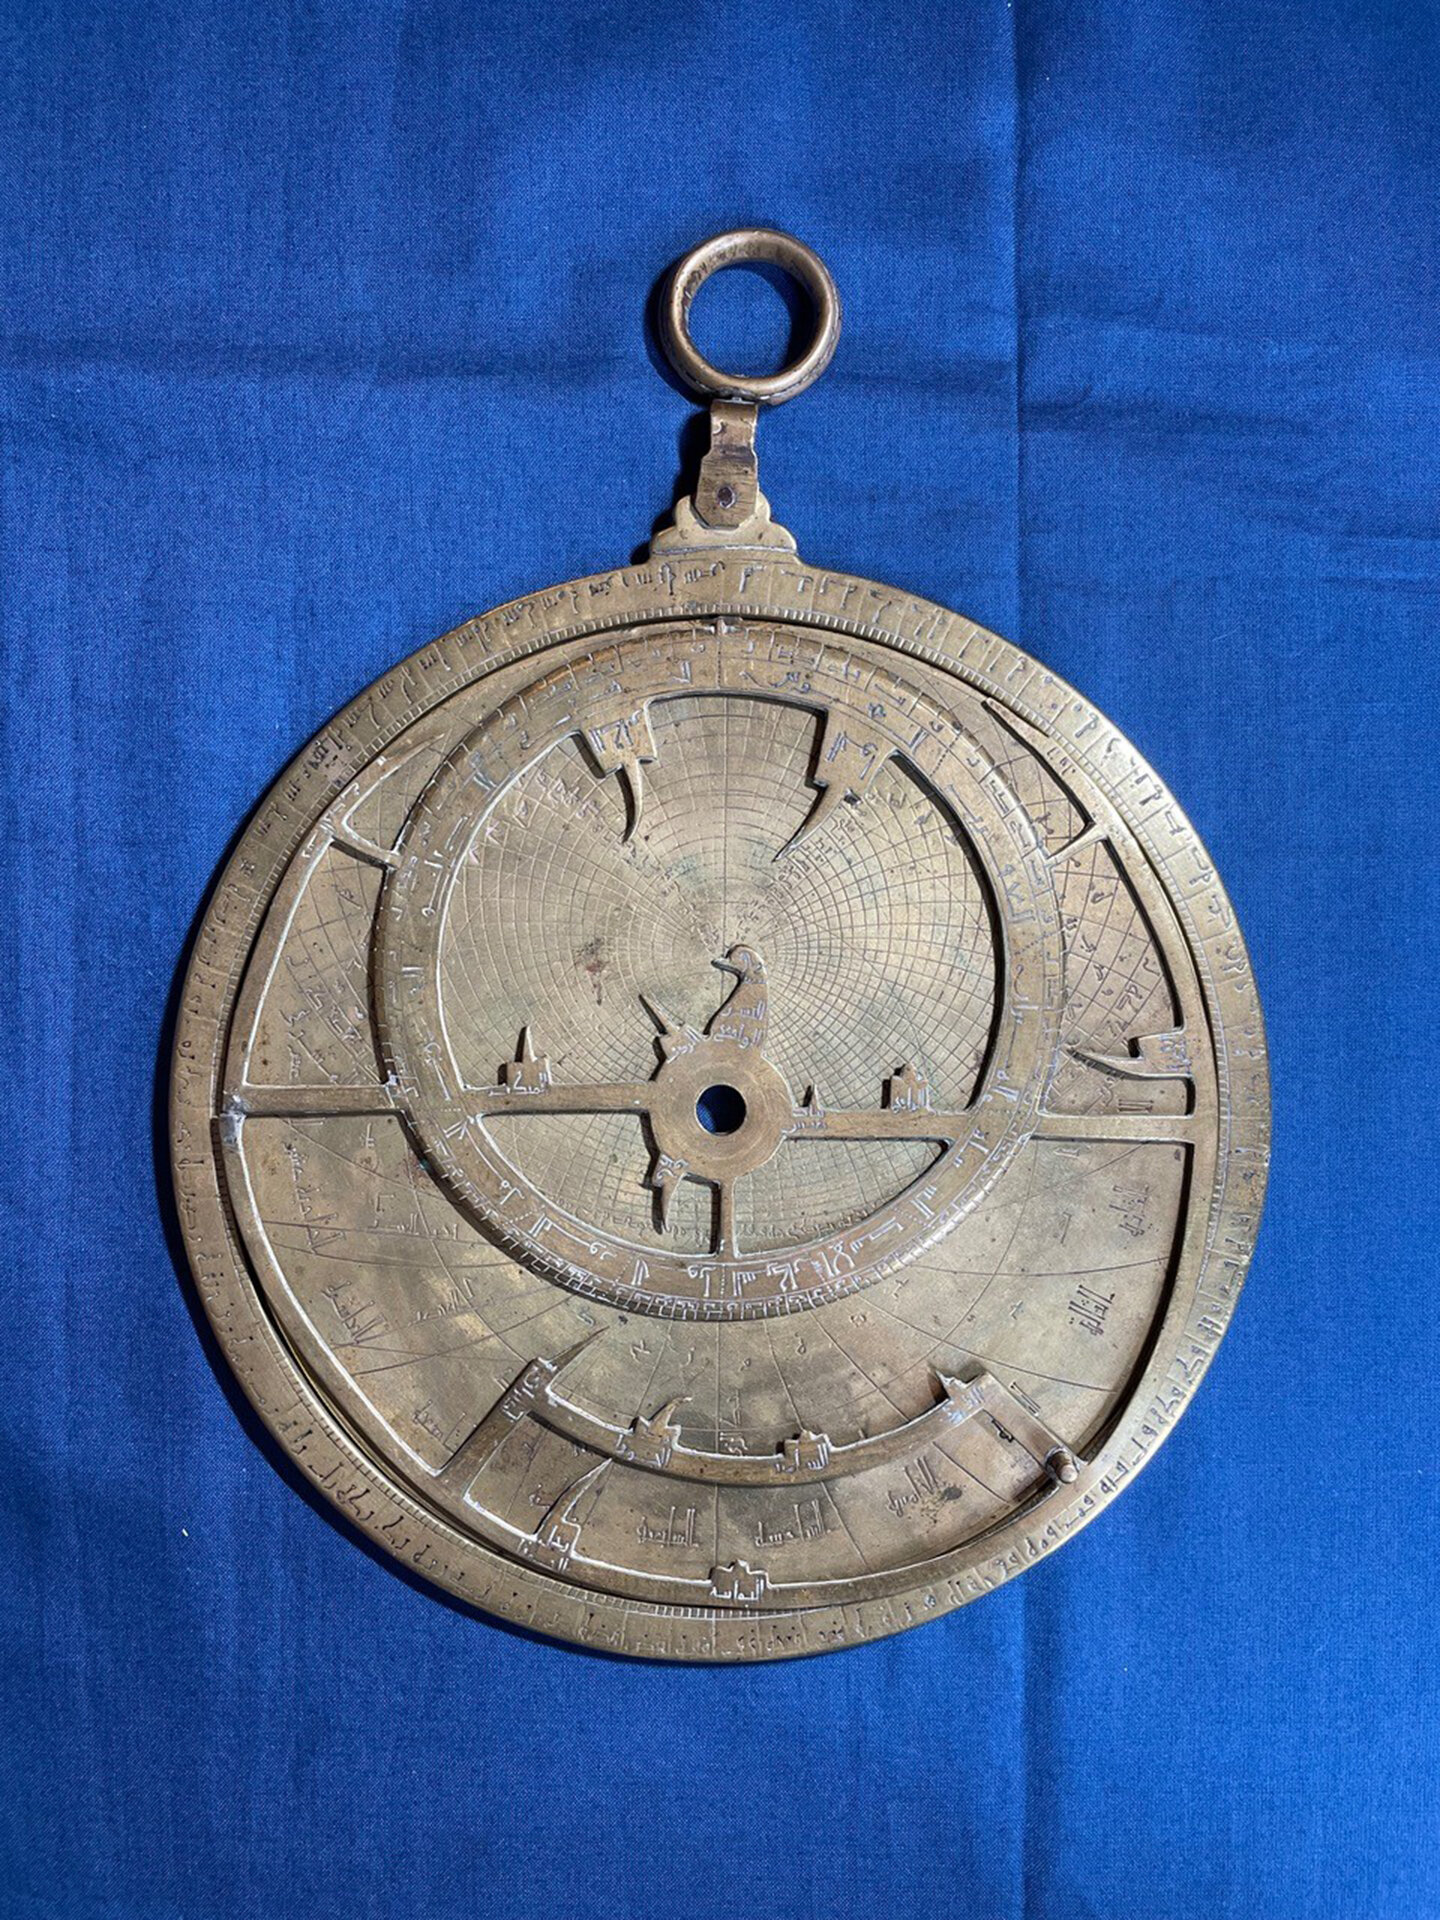 #Rare eleventh-century astrolabe discovery reveals Islamic–Jewish scientific exchange